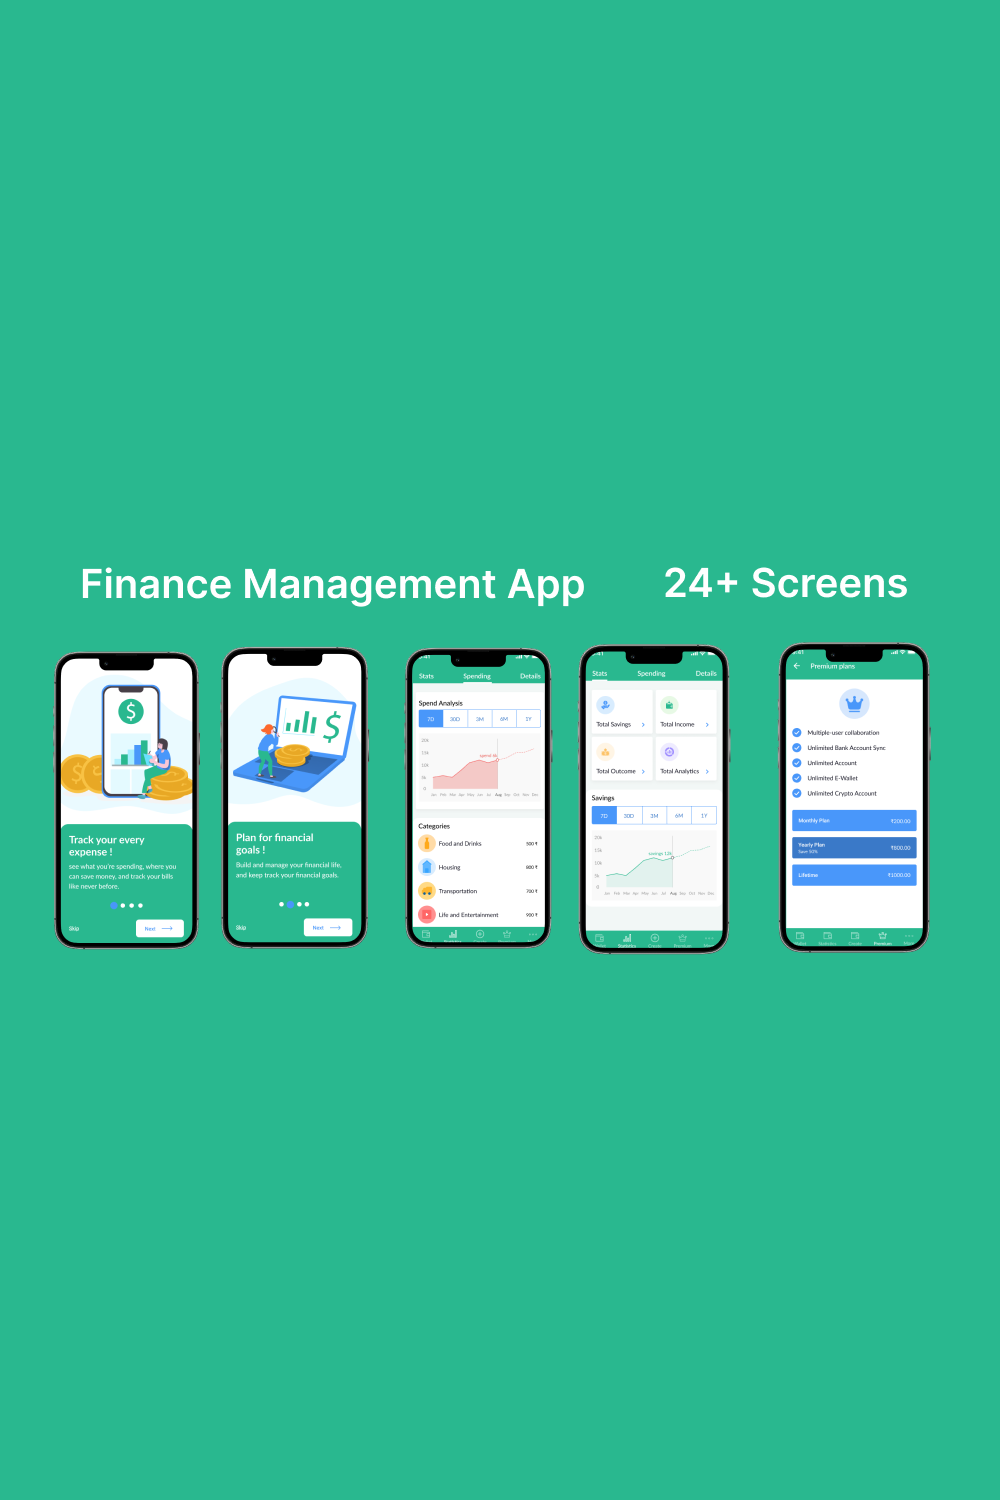 Finance Management App UI Kit pinterest image.